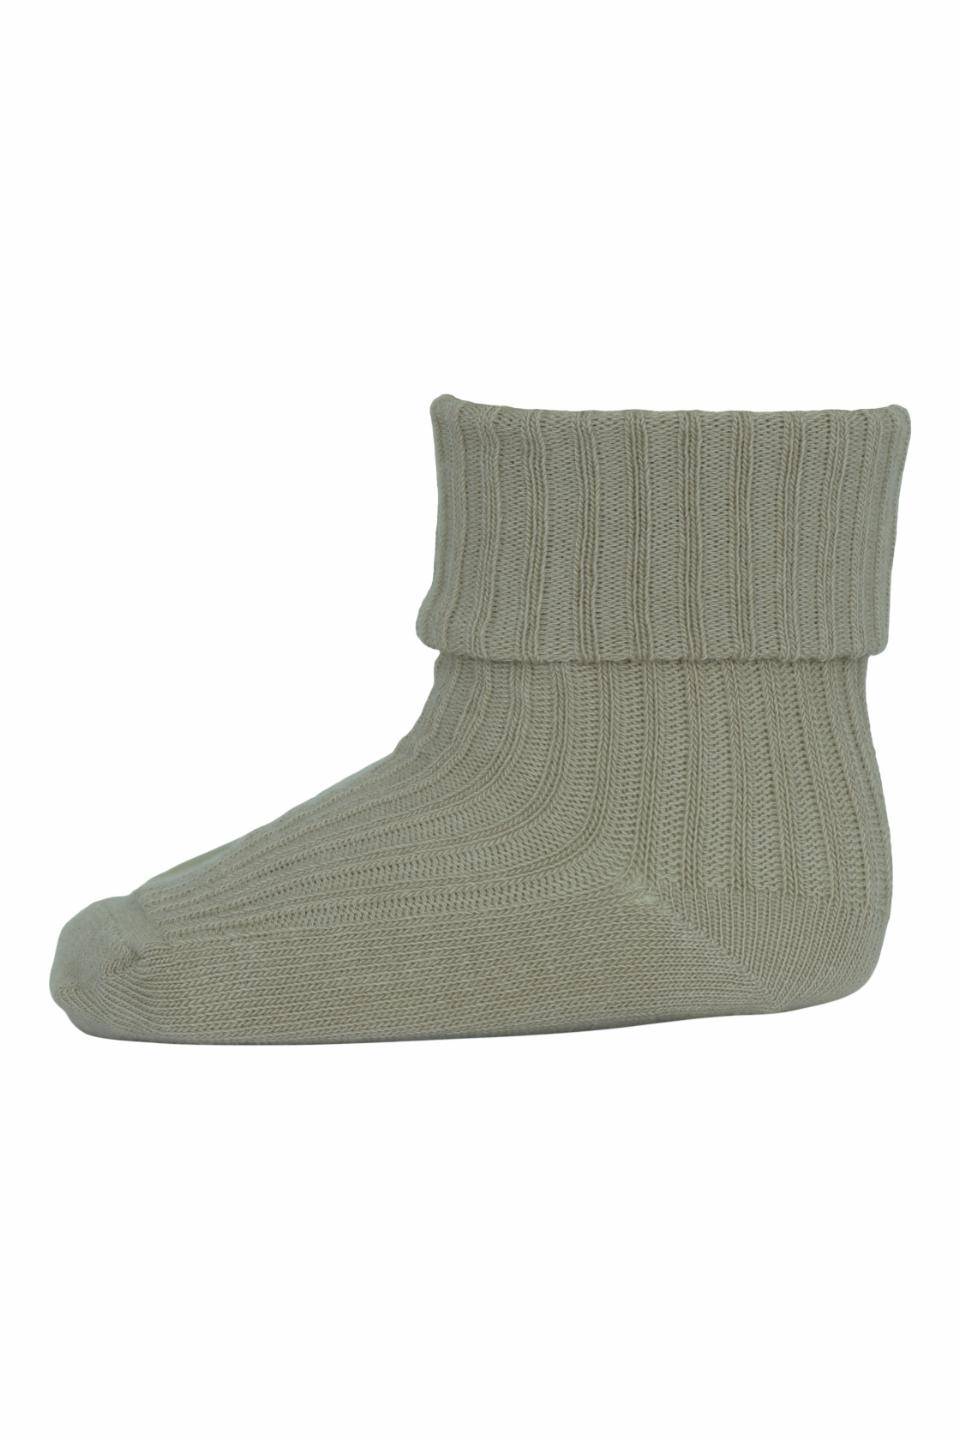 MP Denmark - cotton rib socks - 10-533-0 3049 - desert sage - Hyggekids